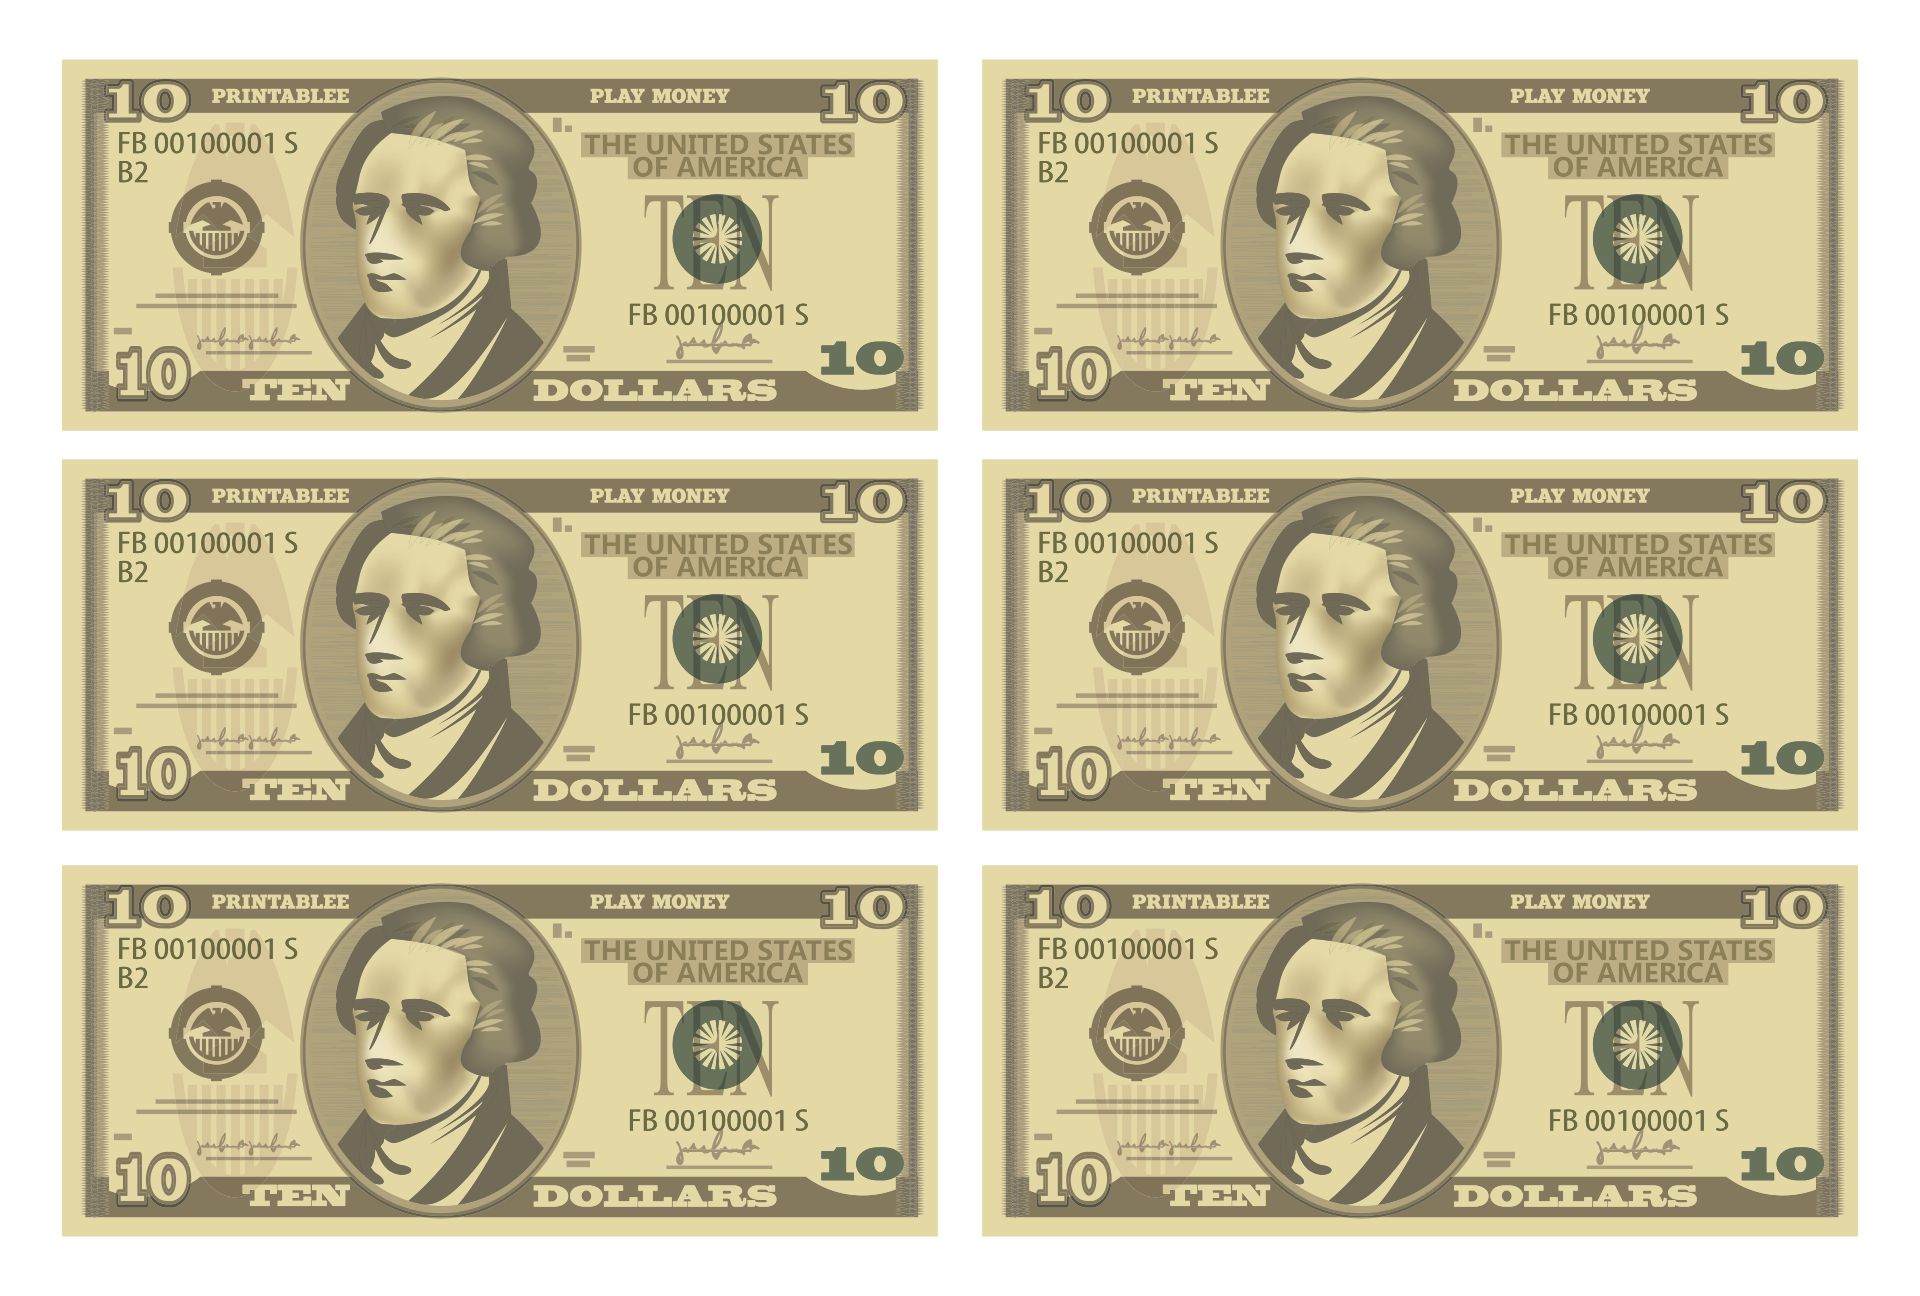 Printable Play Money 10 Dollar Bills